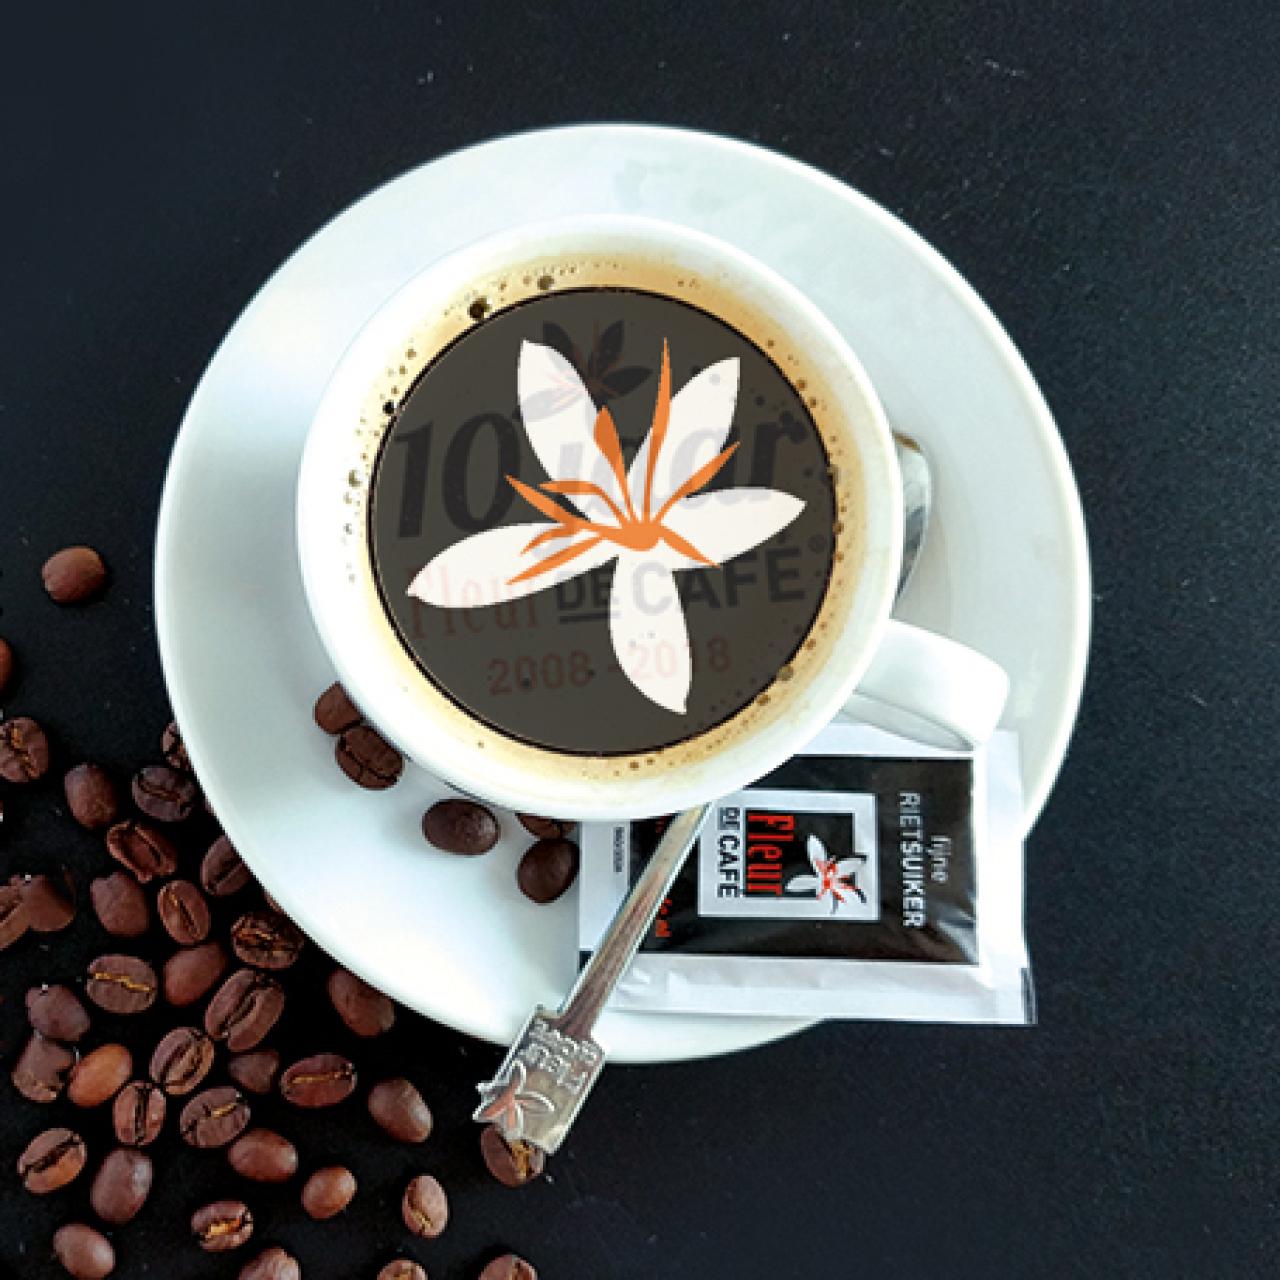 Koffie gedrukt met logo Fleur de cafe